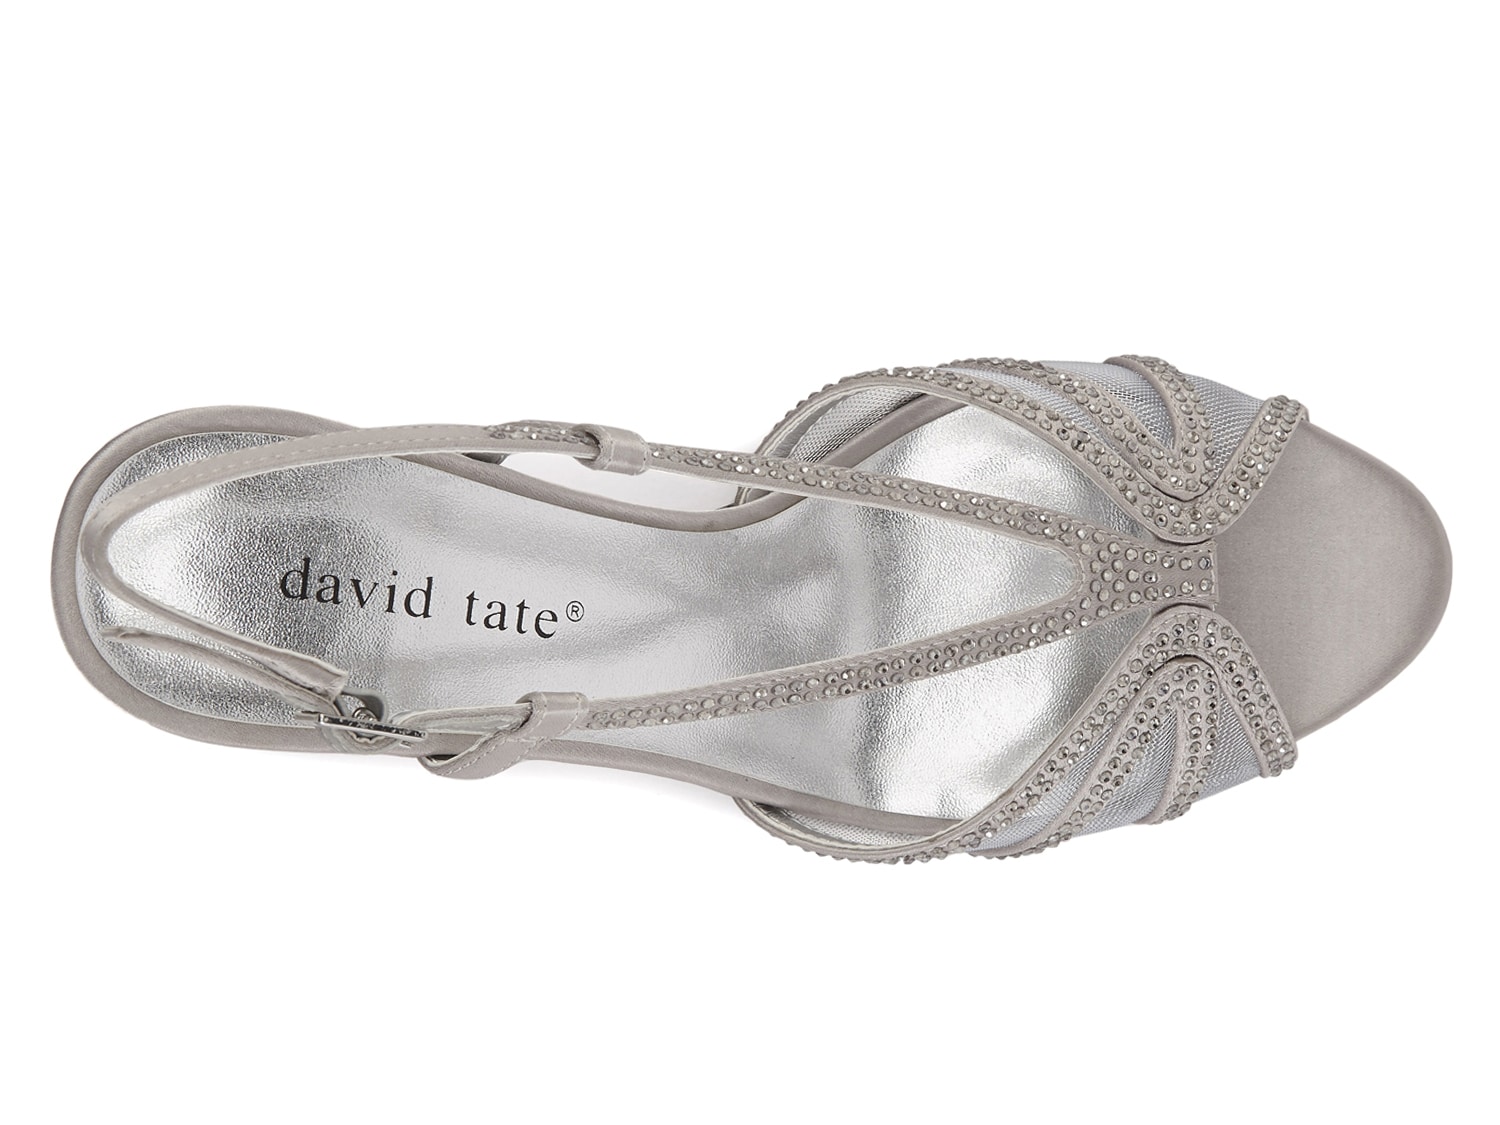 david tate reveal sandal